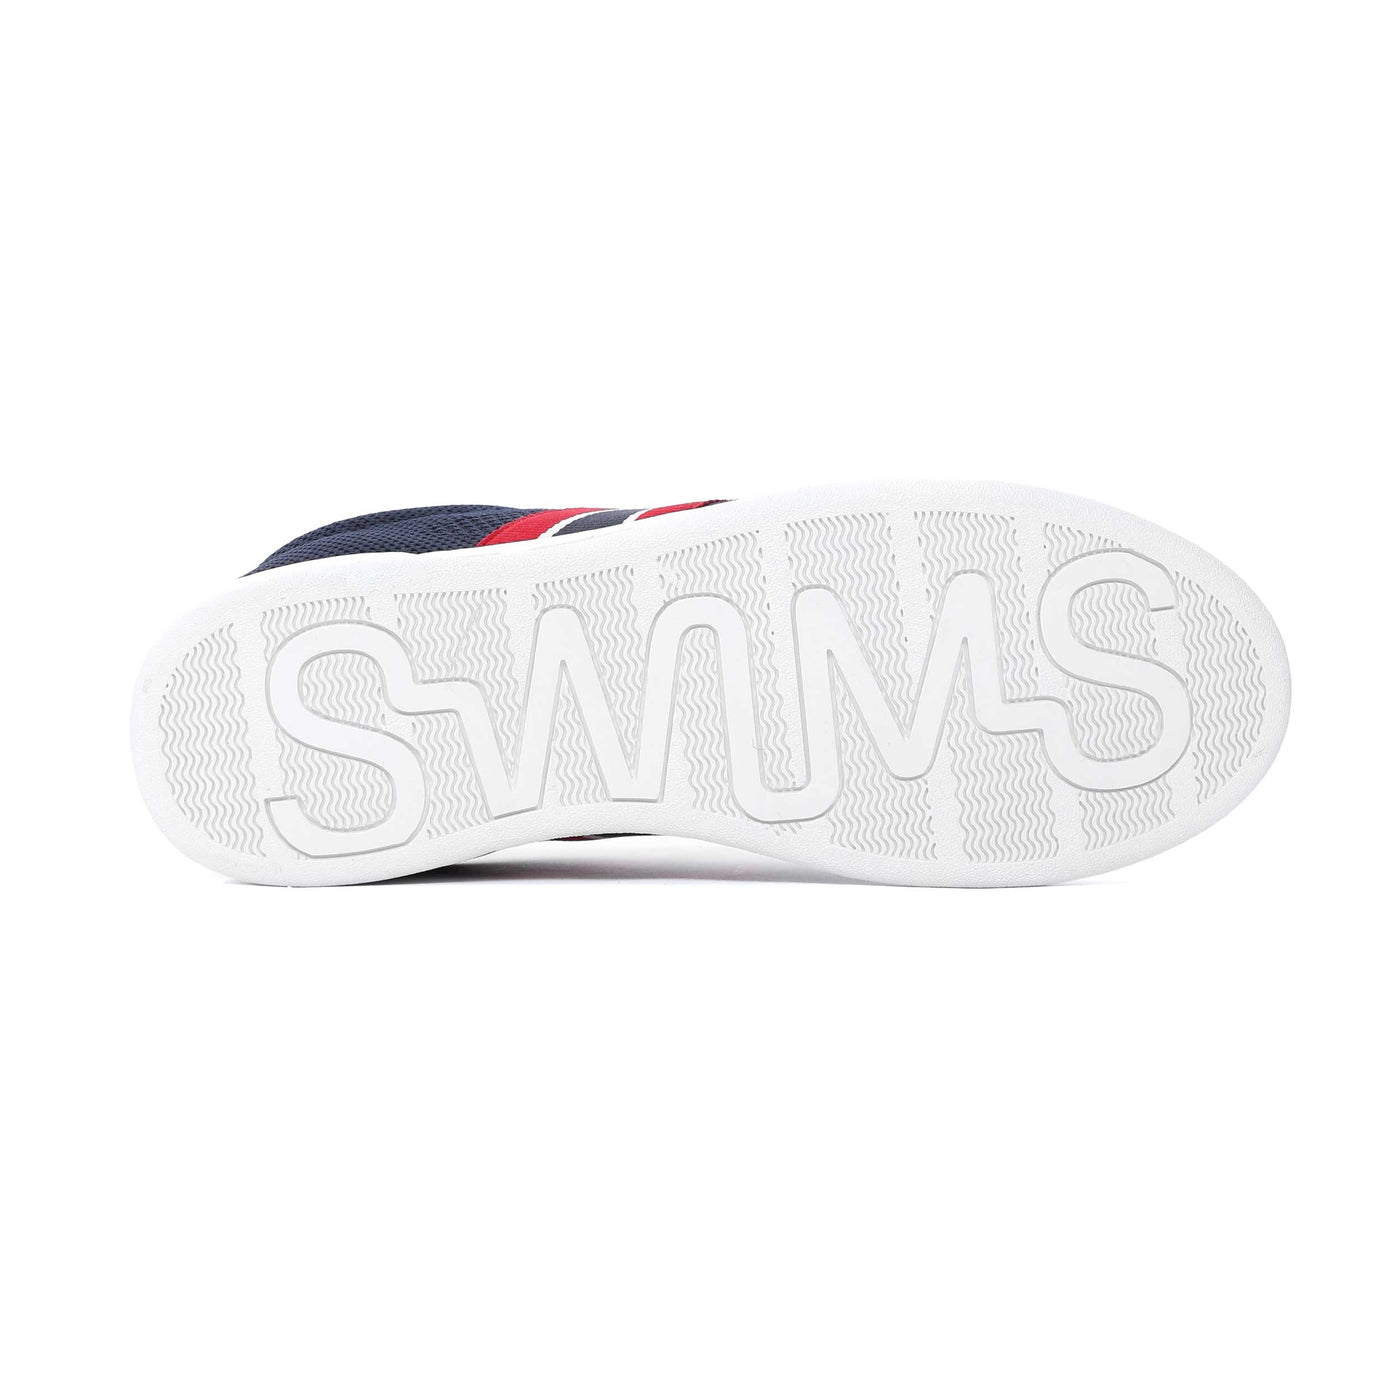 Swims Solaro Sneaker Trainer in Navy Sole